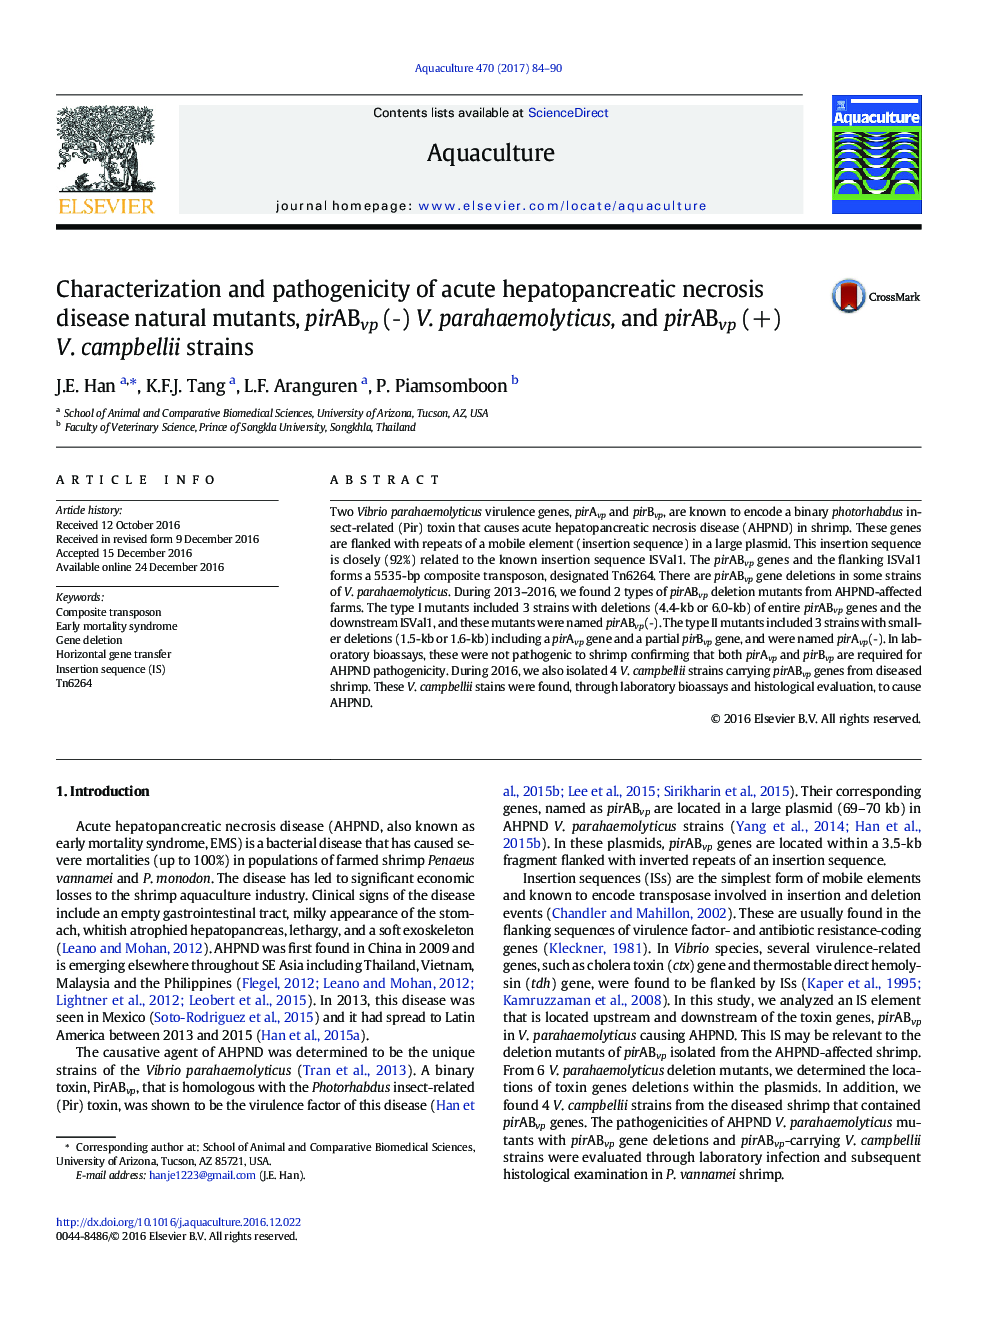 Characterization and pathogenicity of acute hepatopancreatic necrosis disease natural mutants, pirABvp (â) V. parahaemolyticus, and pirABvp (+) V. campbellii strains